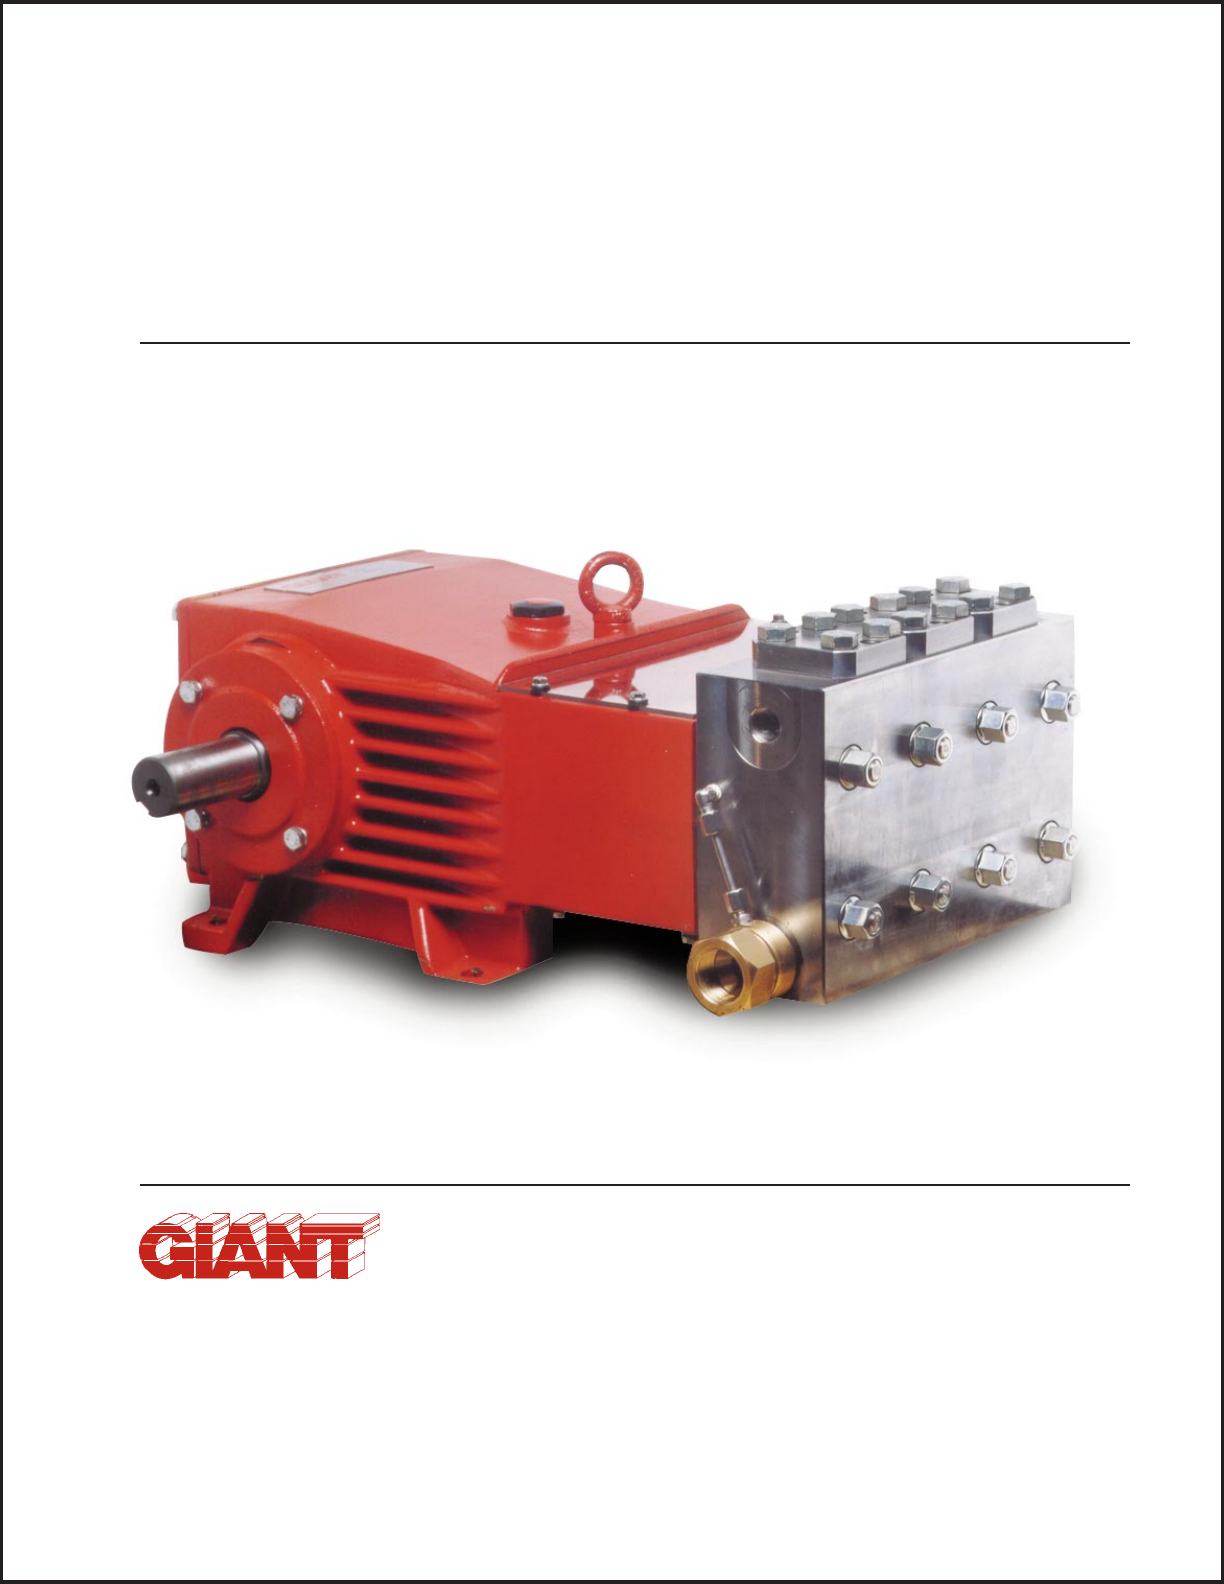 Giant pressure washer pump manual